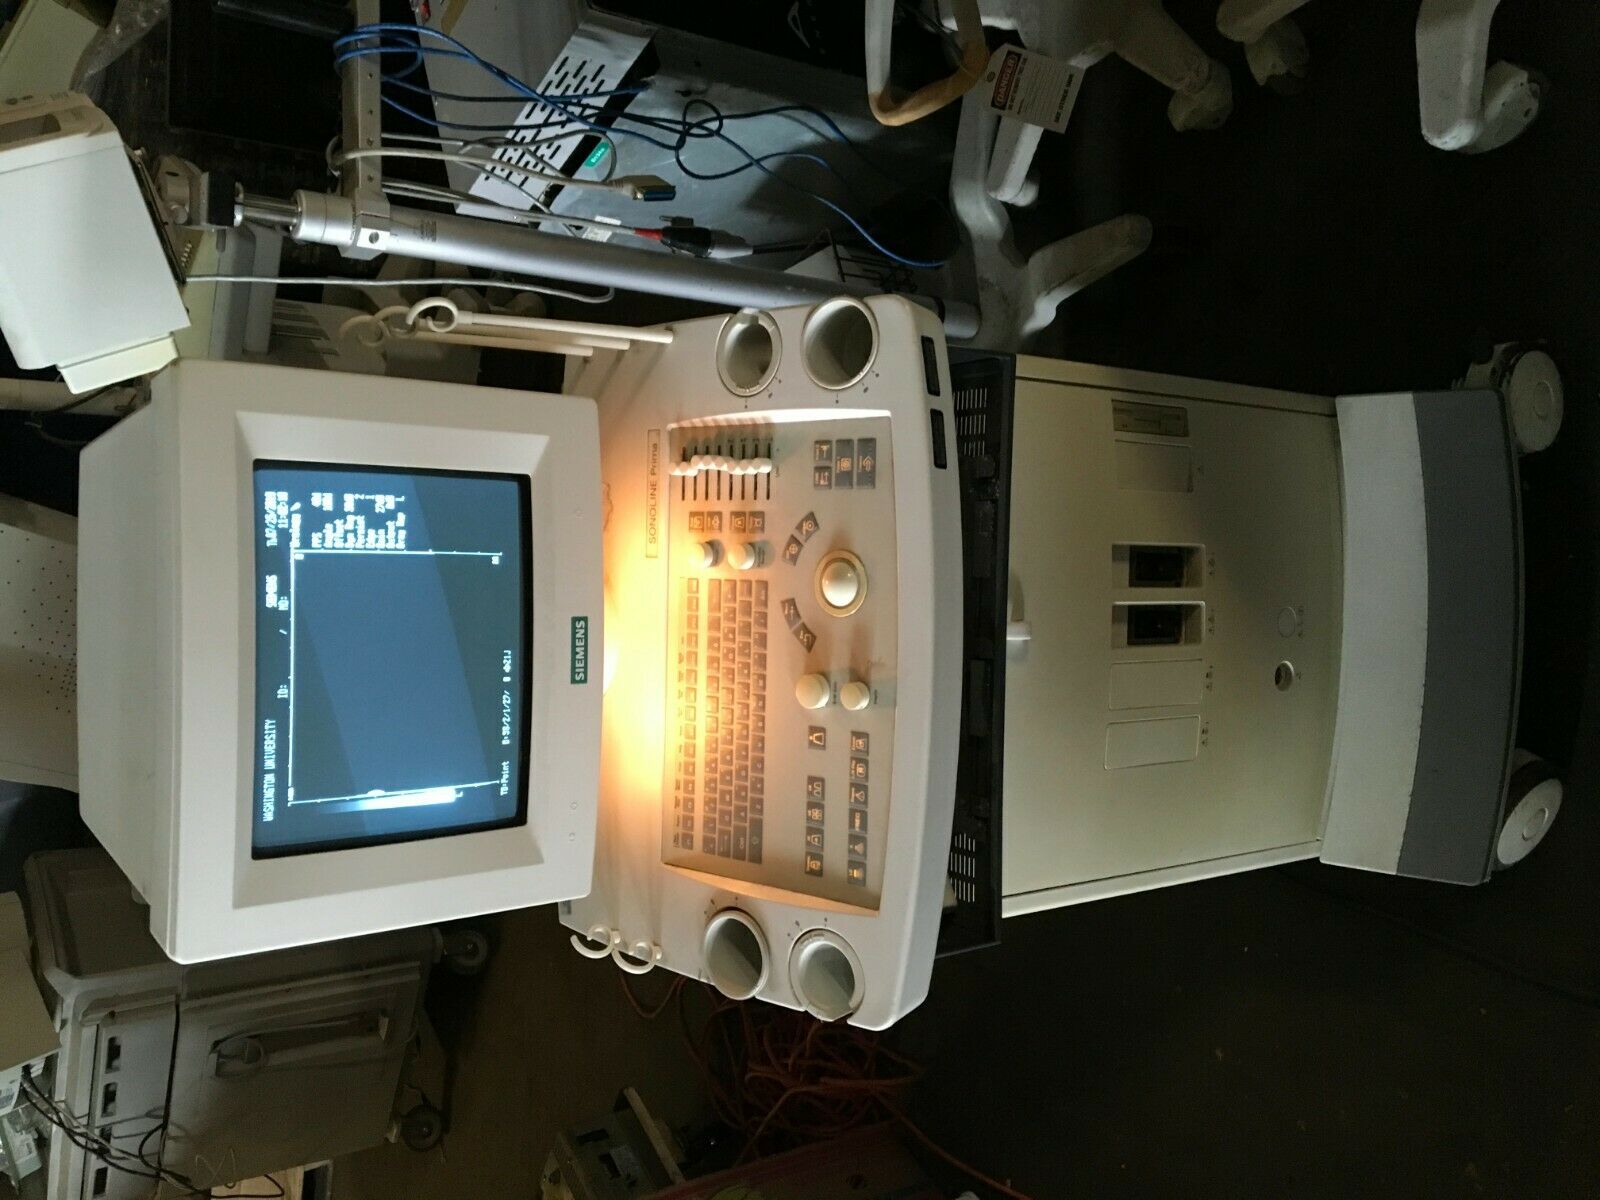 Siemens Sonoline Prima Ultrasound System Machine 4900580-LV300 DIAGNOSTIC ULTRASOUND MACHINES FOR SALE